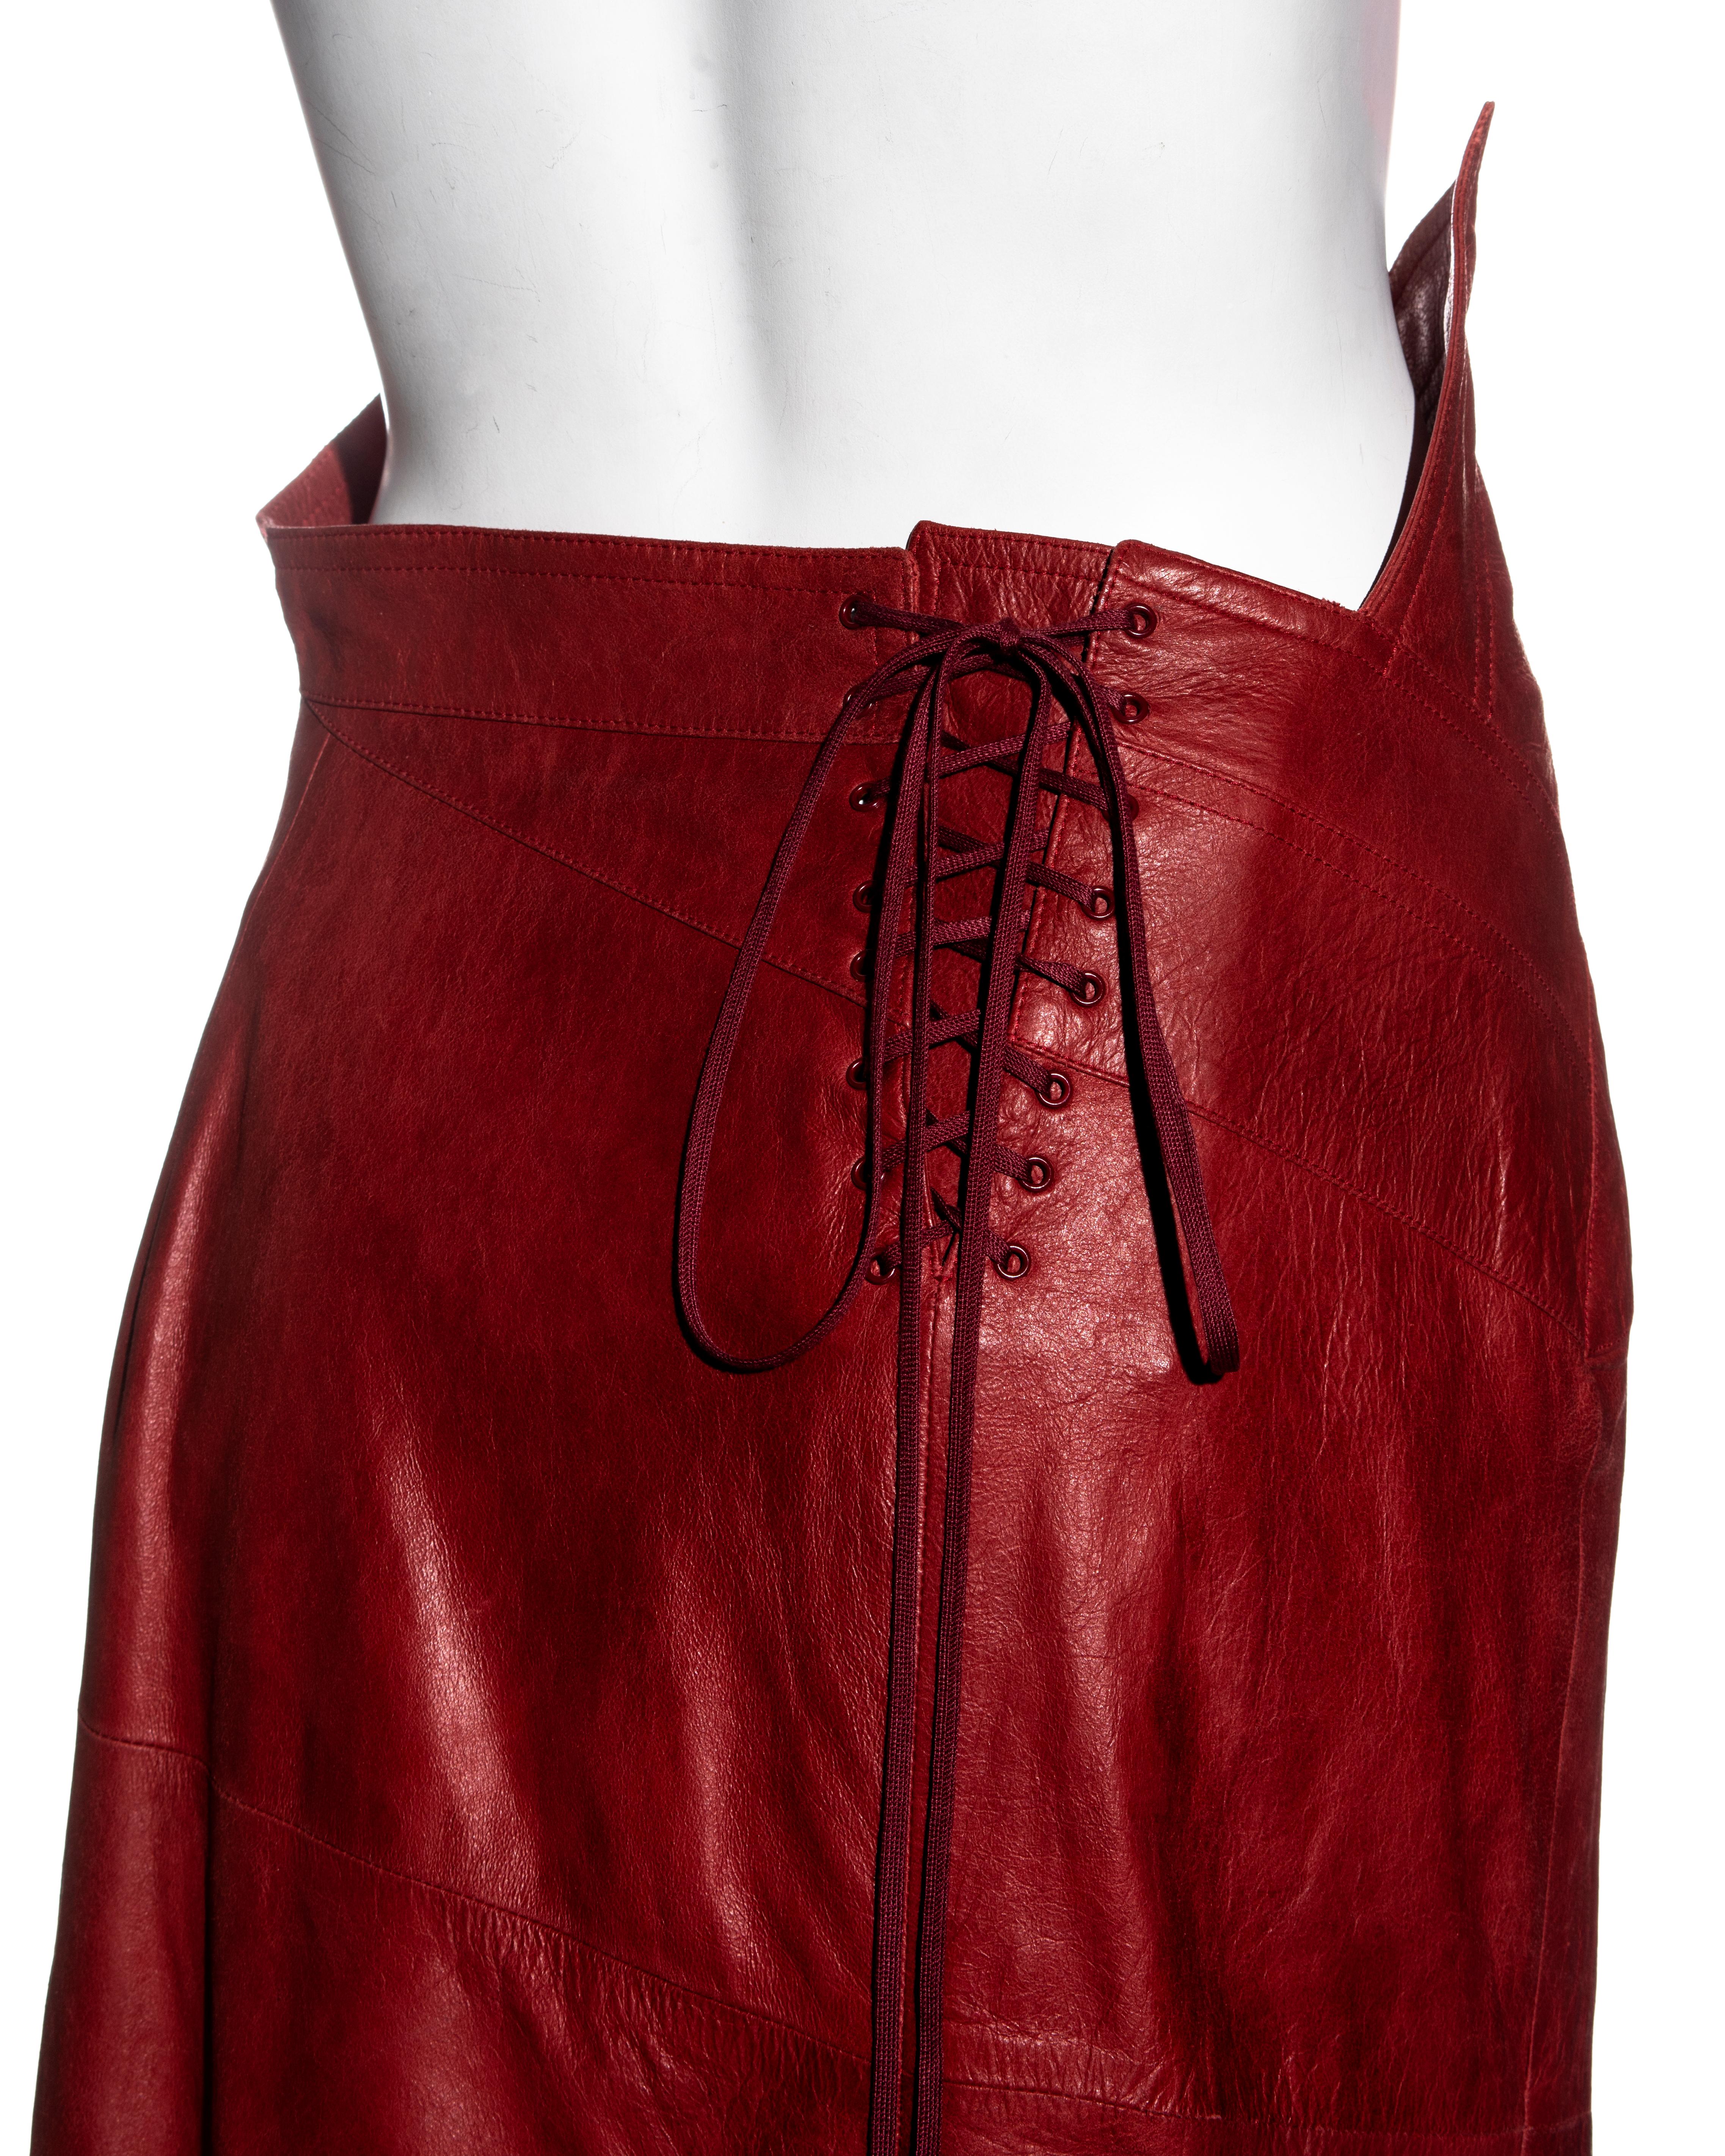 Women's Christian Dior by John Galliano red leather asymmetric cut skirt, ss 2000